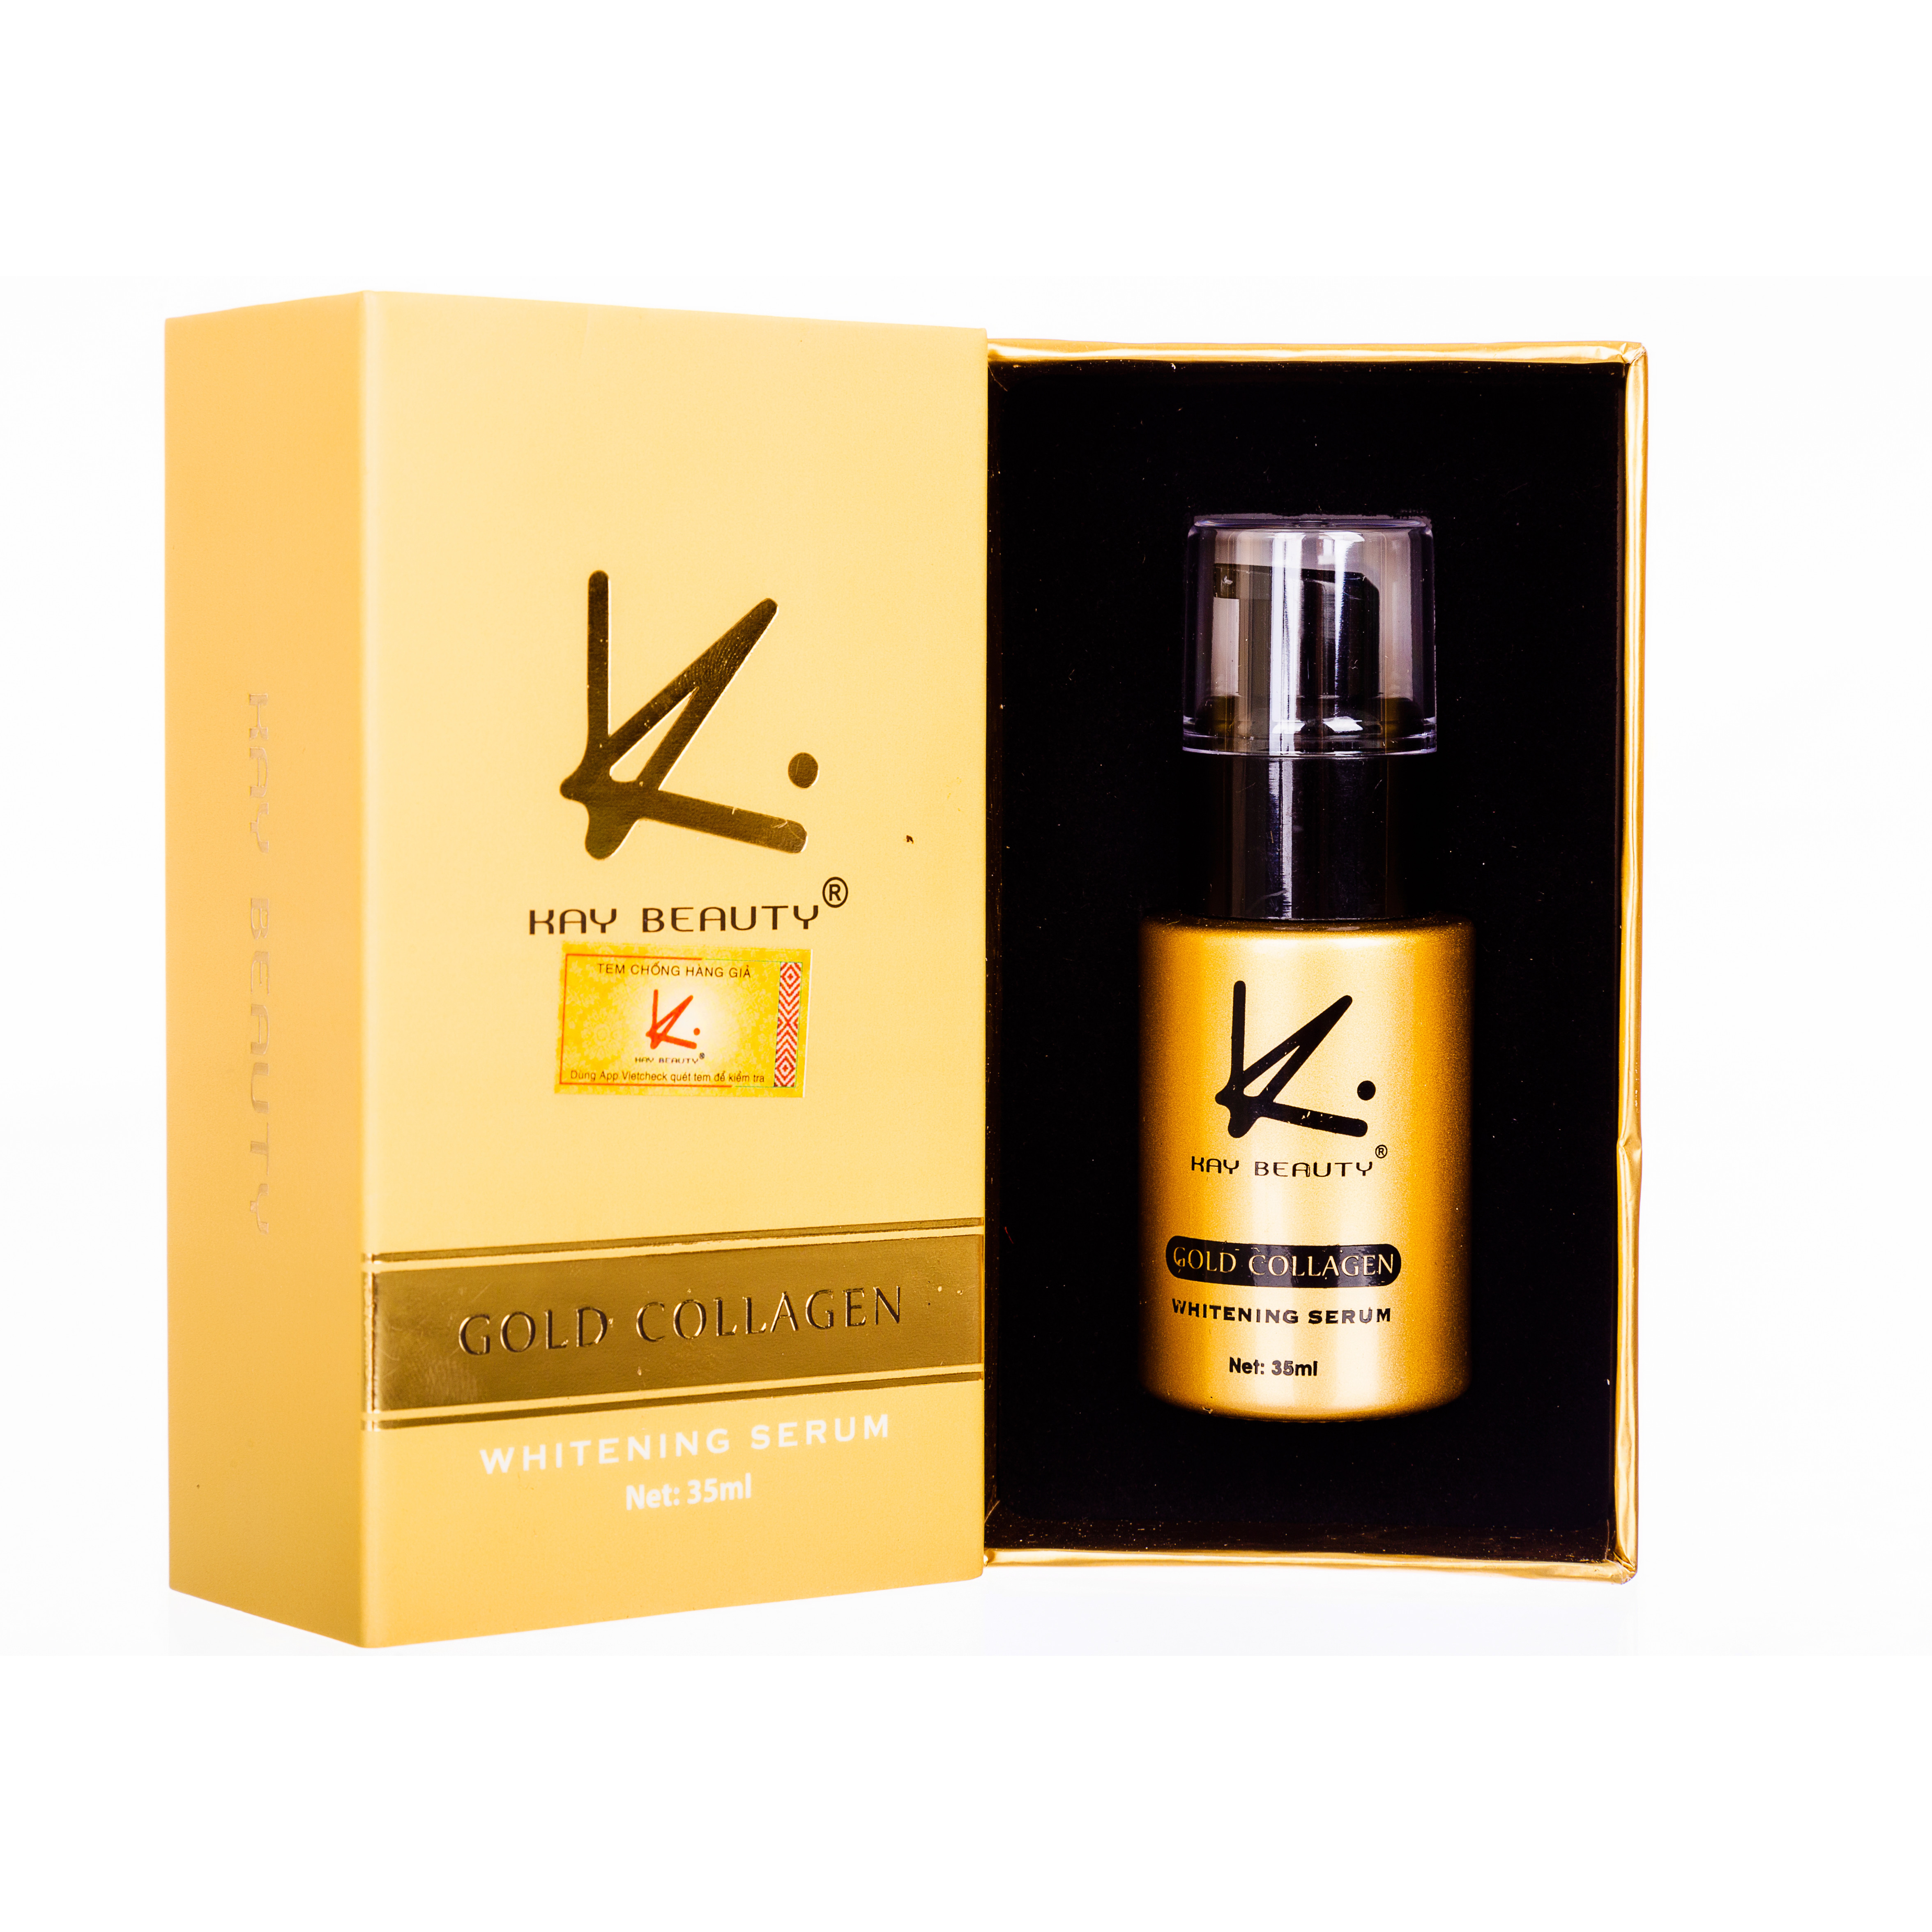 Serum trẻ hoá da mặt chống lão hoá - Gold Collagen Whitening Serum Kay Beauty